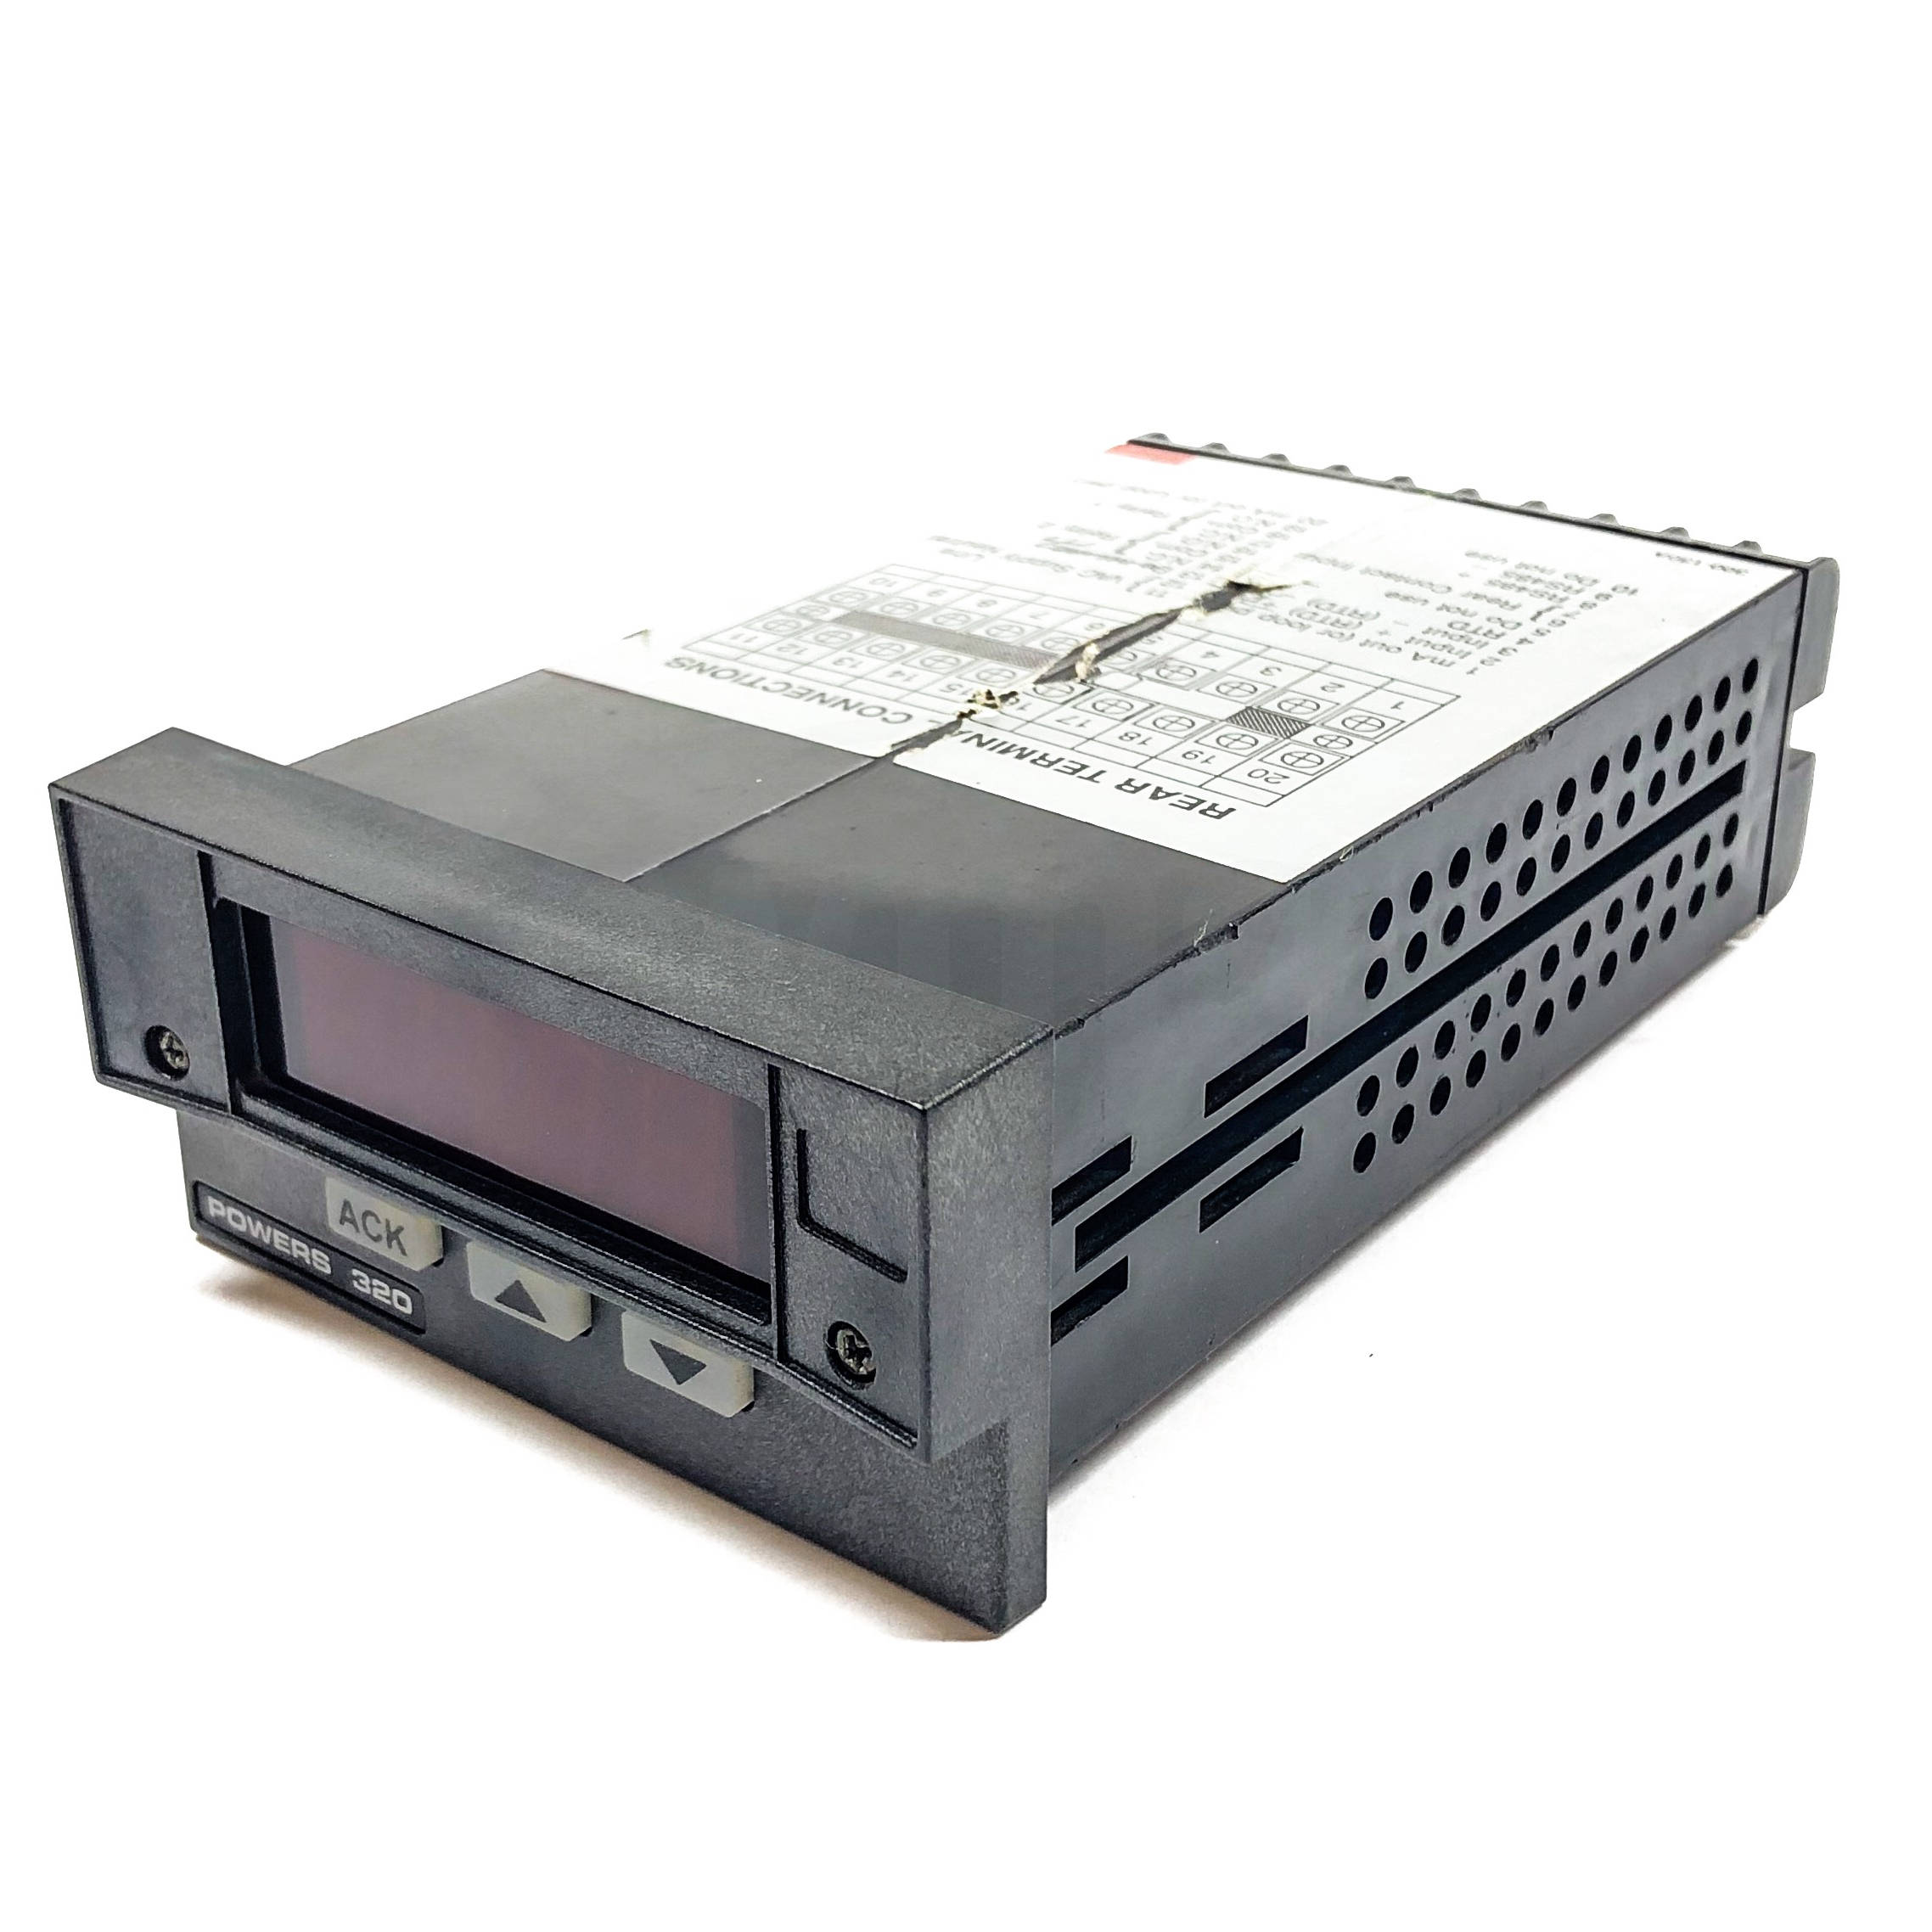 320-B2000 Powers Process Control Monitor 1